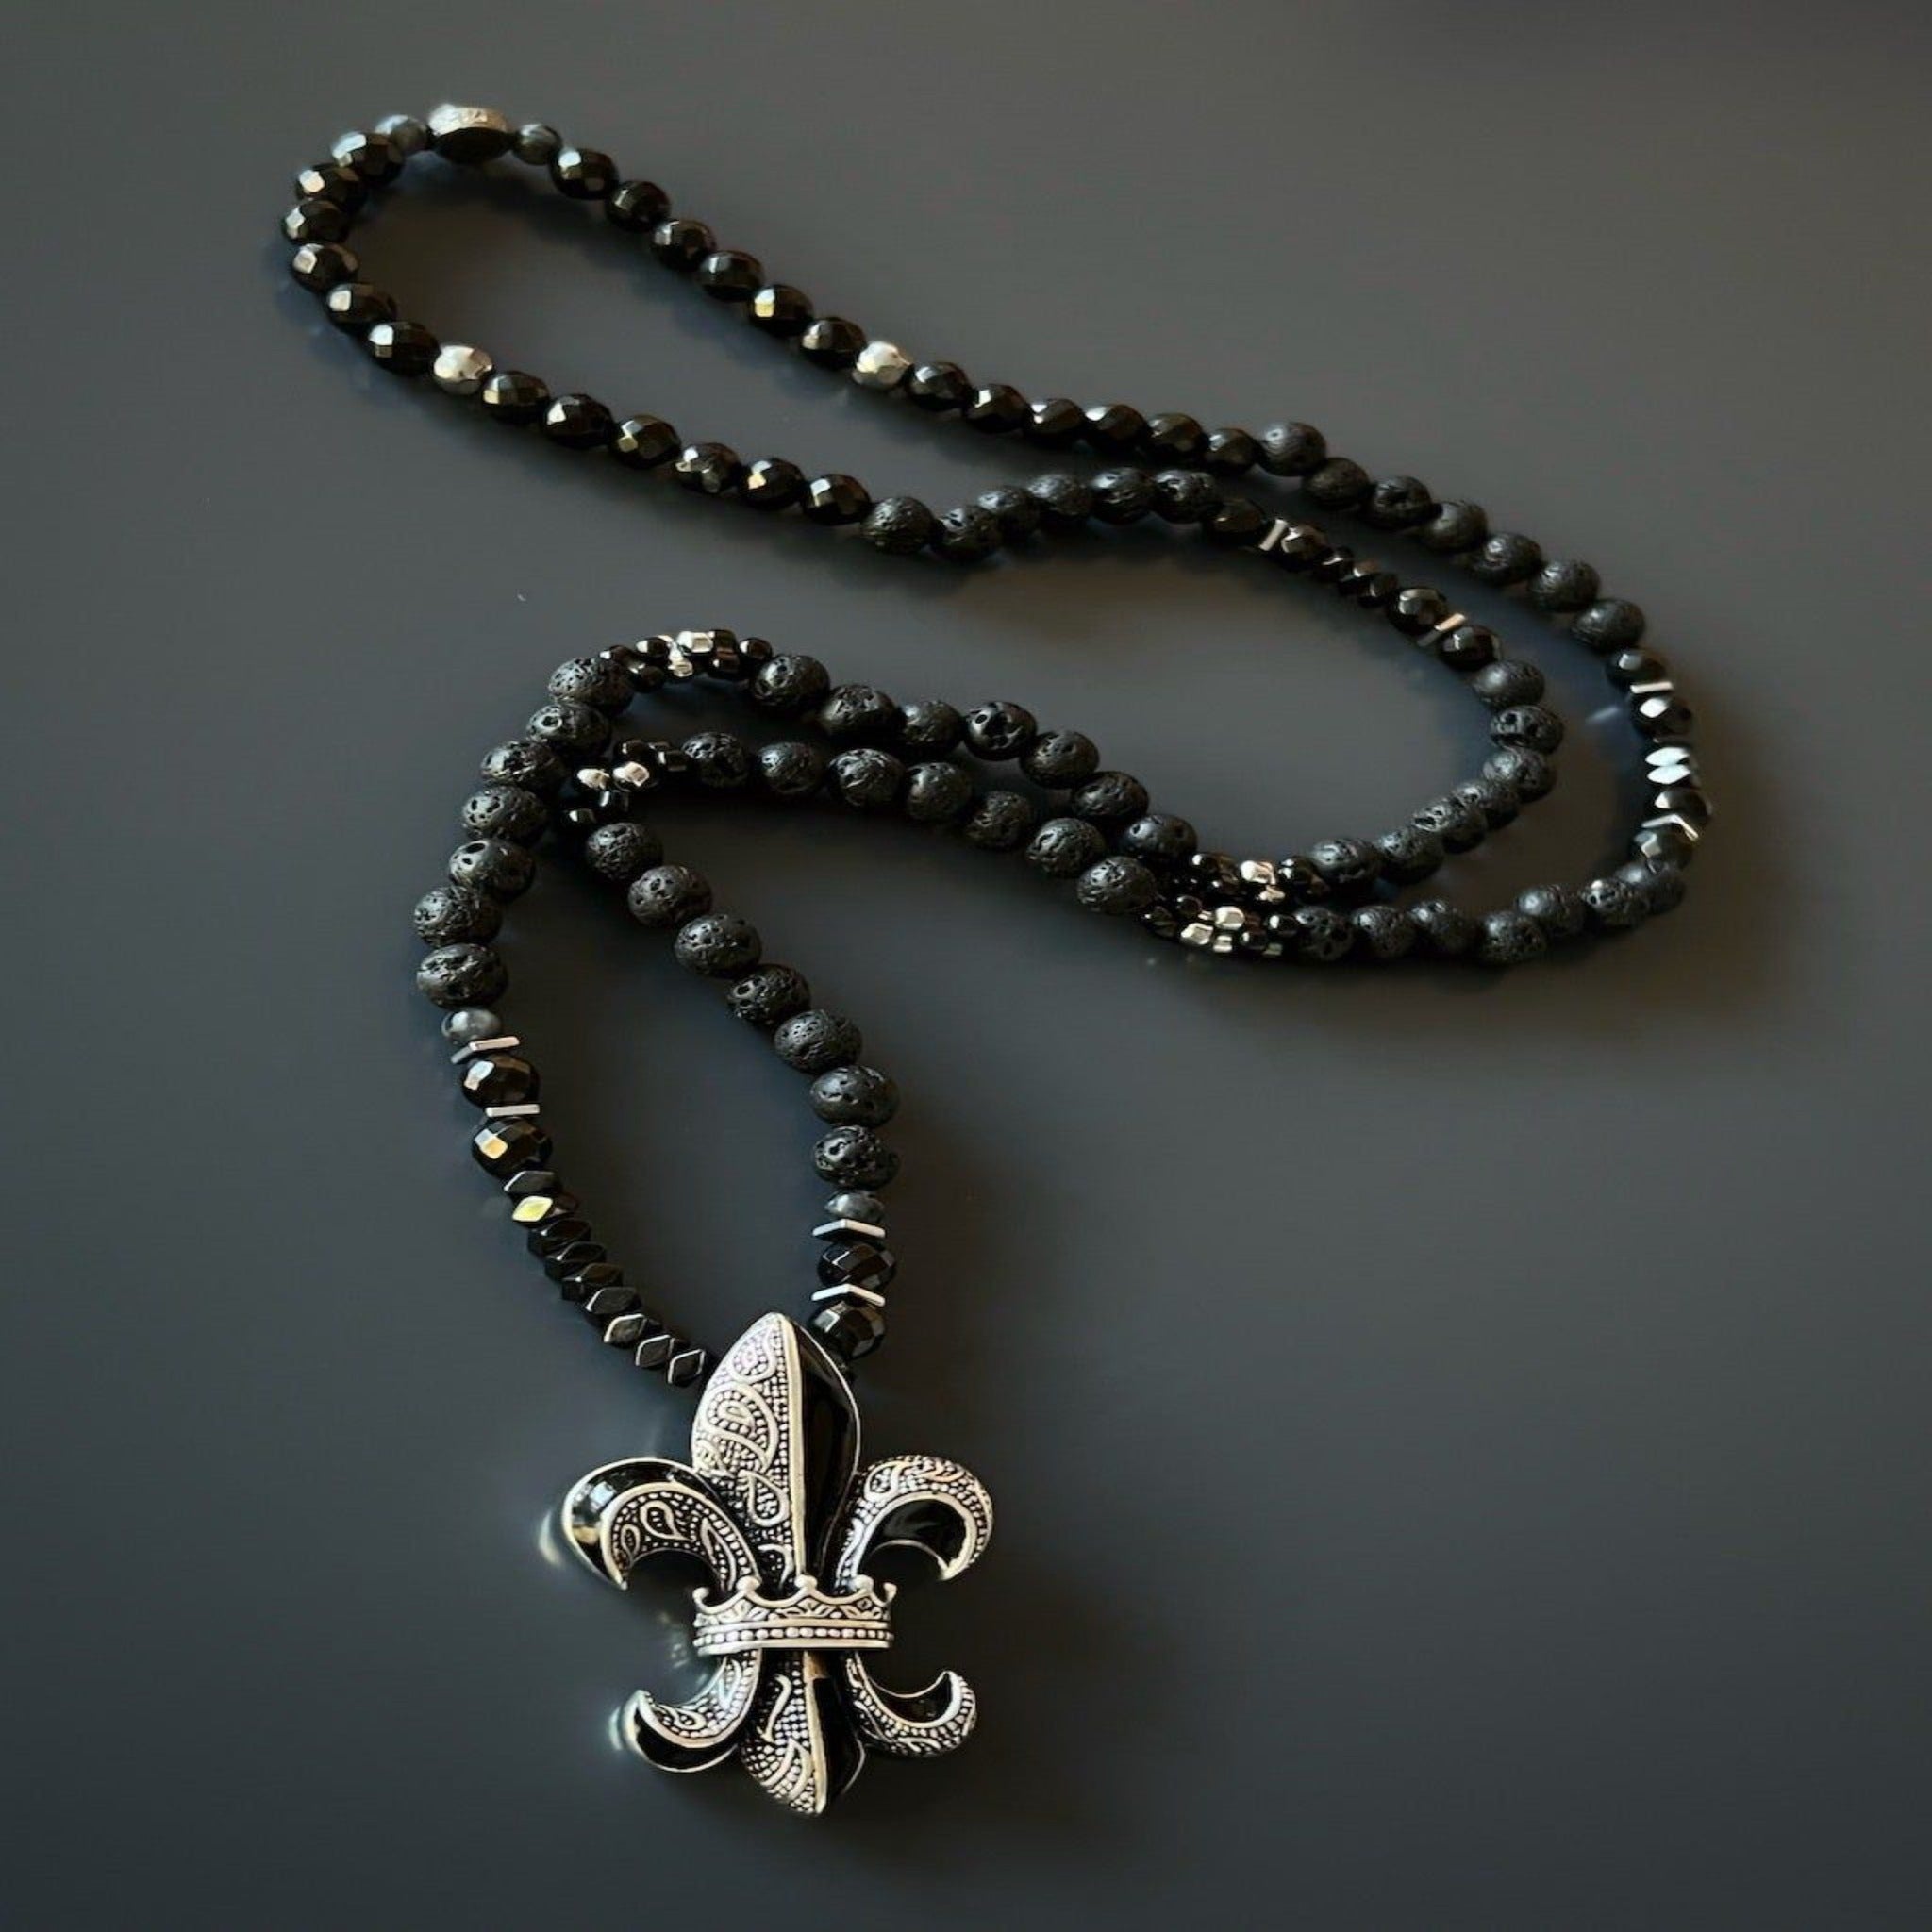 Authority and Grace - Fleur De Lis Necklace with Hematite Beads.